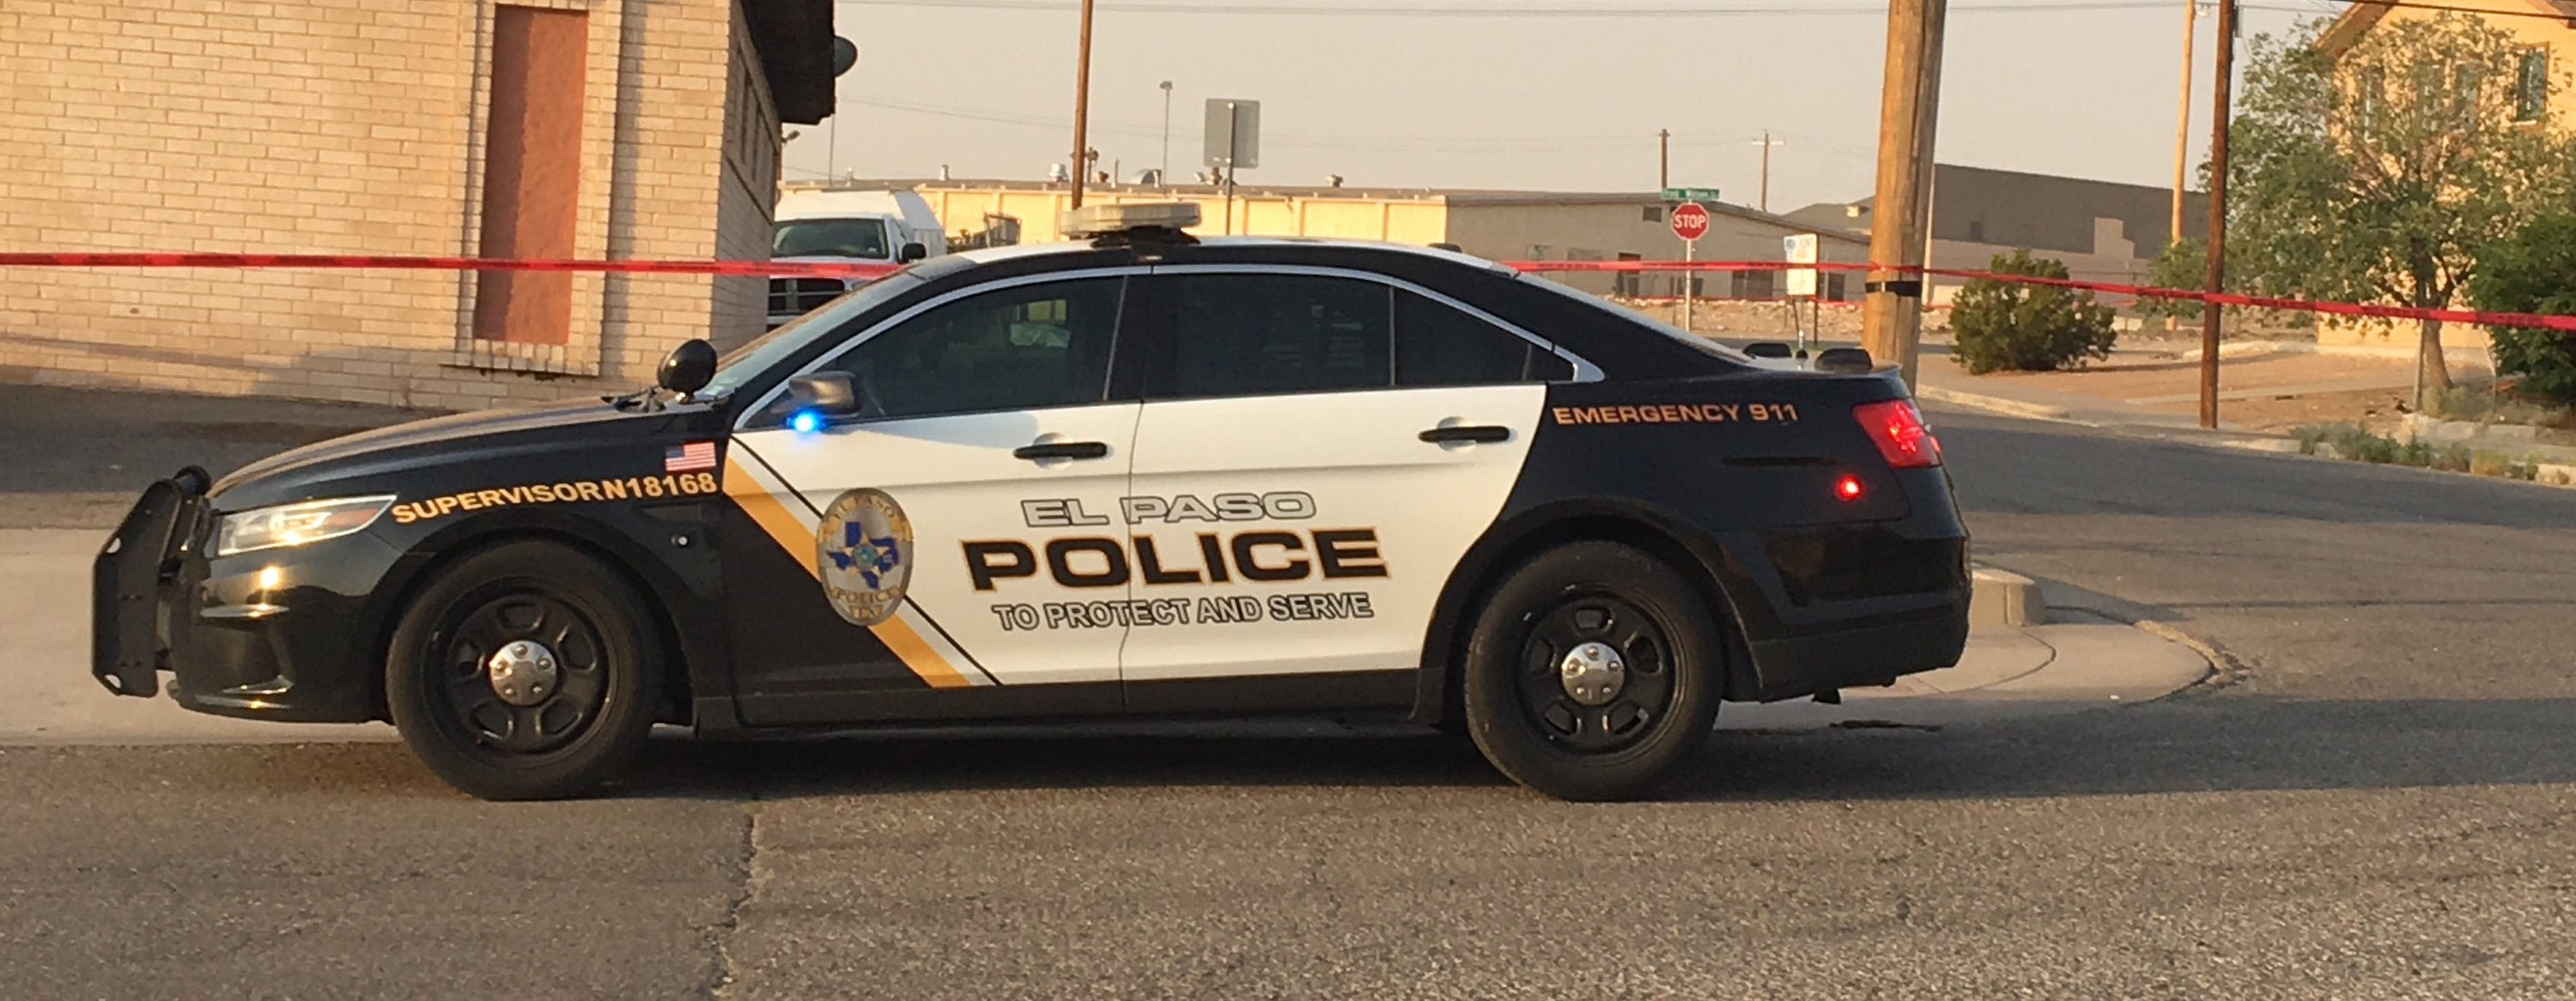 El Paso police investigate fatal shooting in Northeast neighborhood